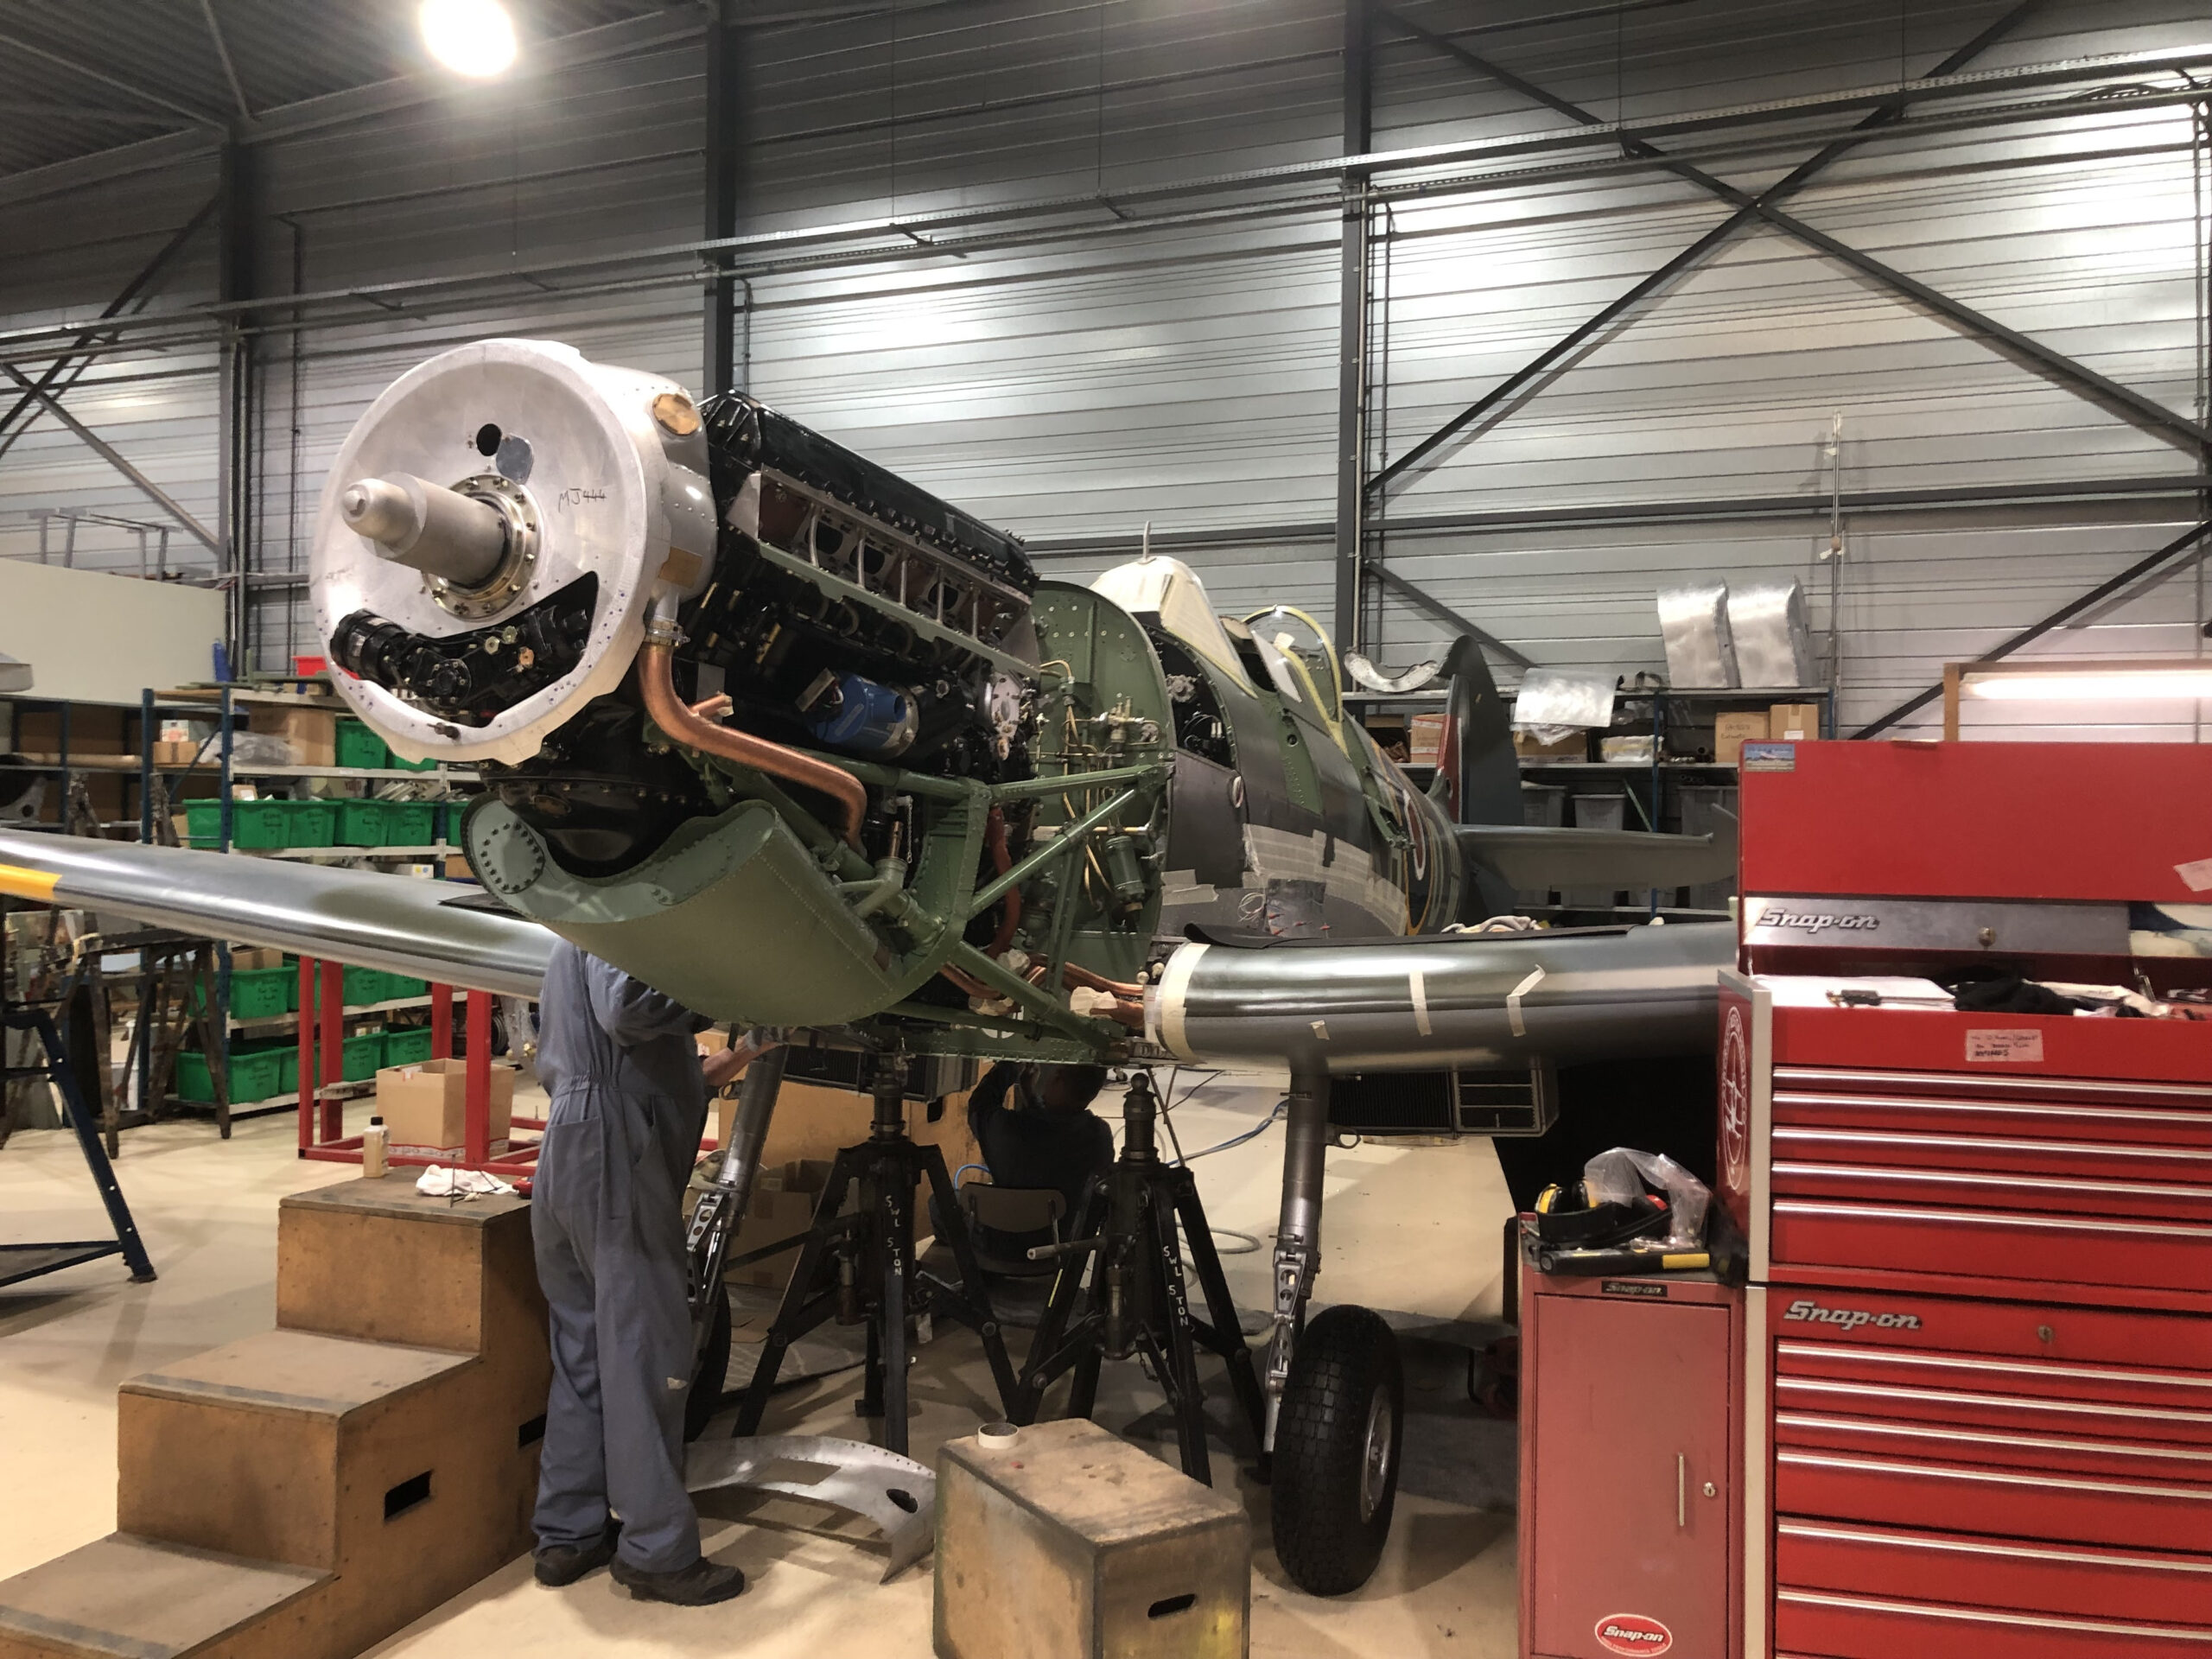 Aero Legends' Spitfire MJ444 Restoration Update